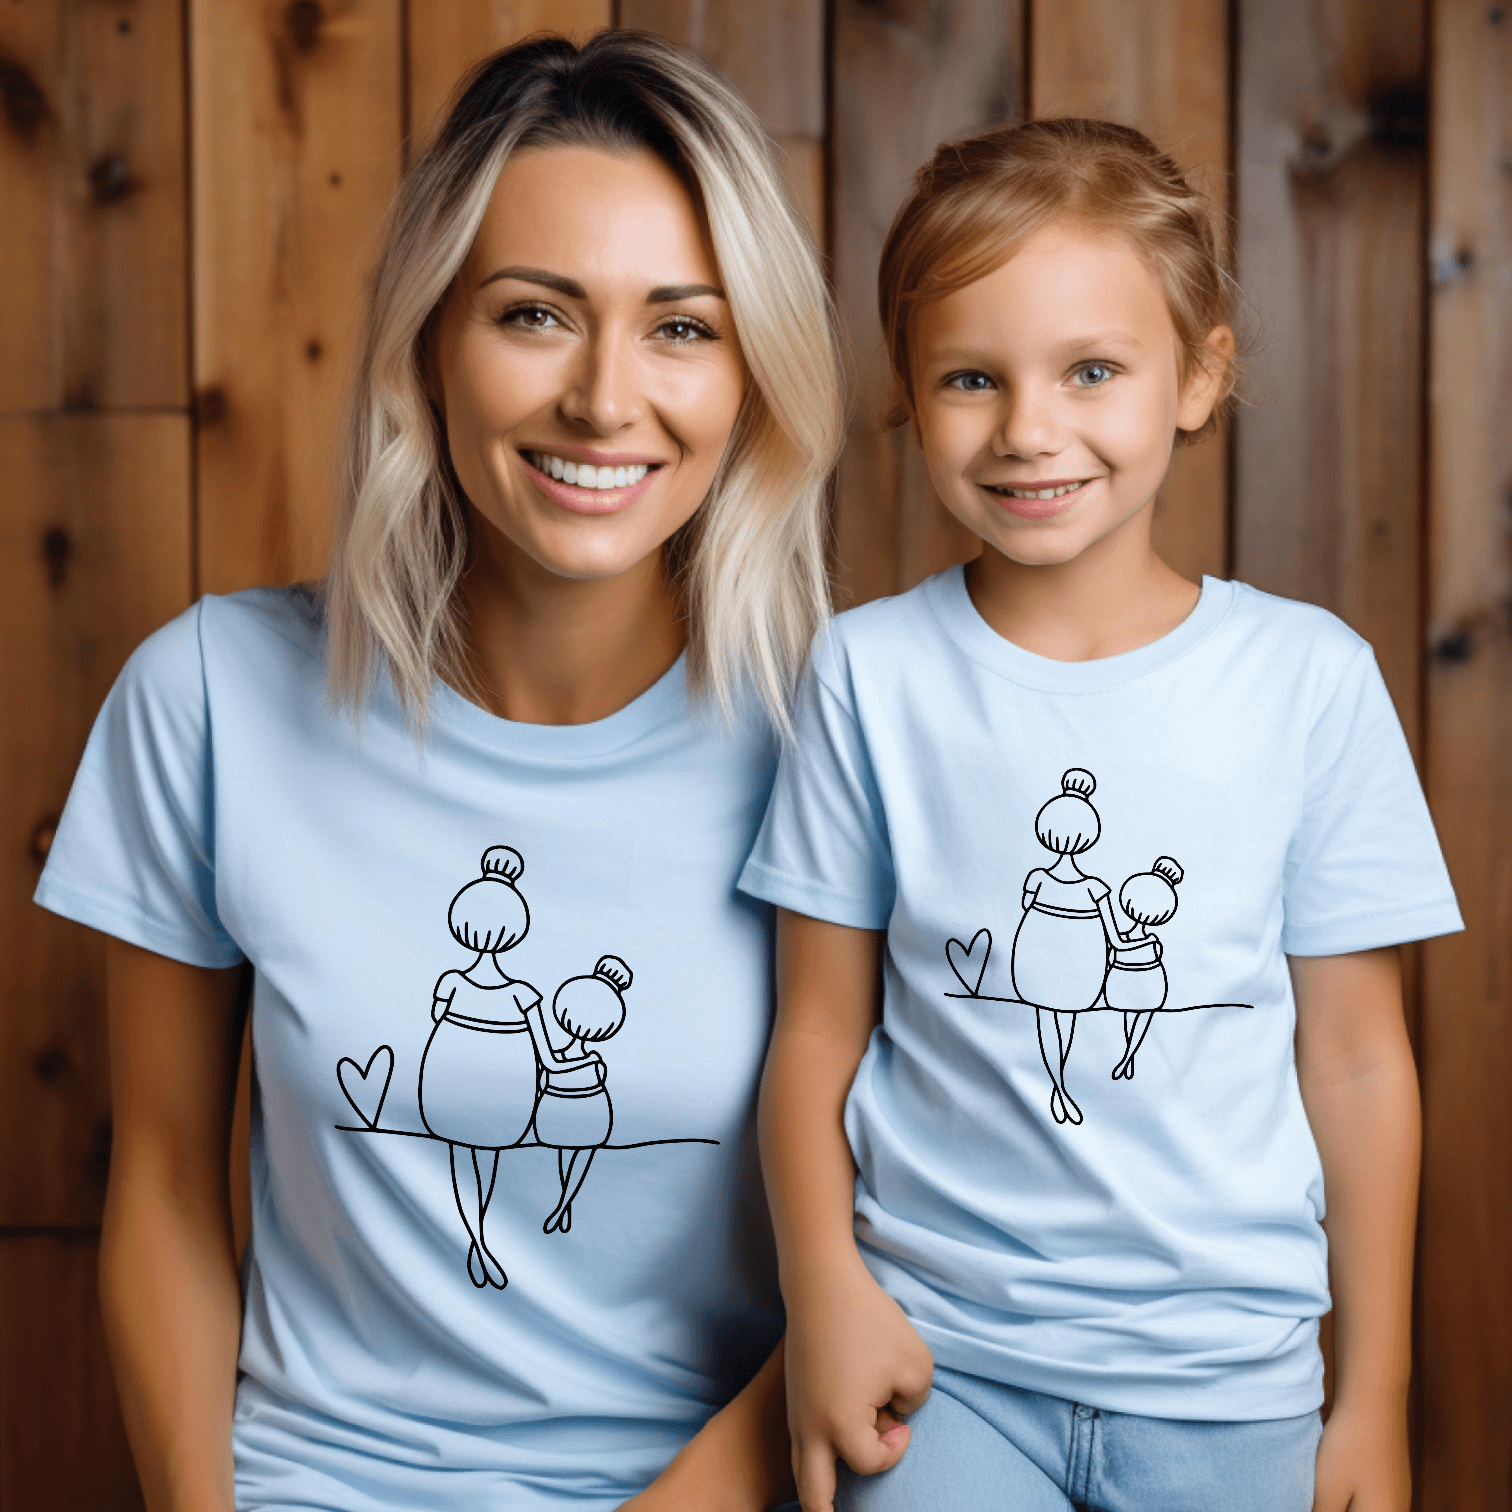 Camiseta mami y niña love